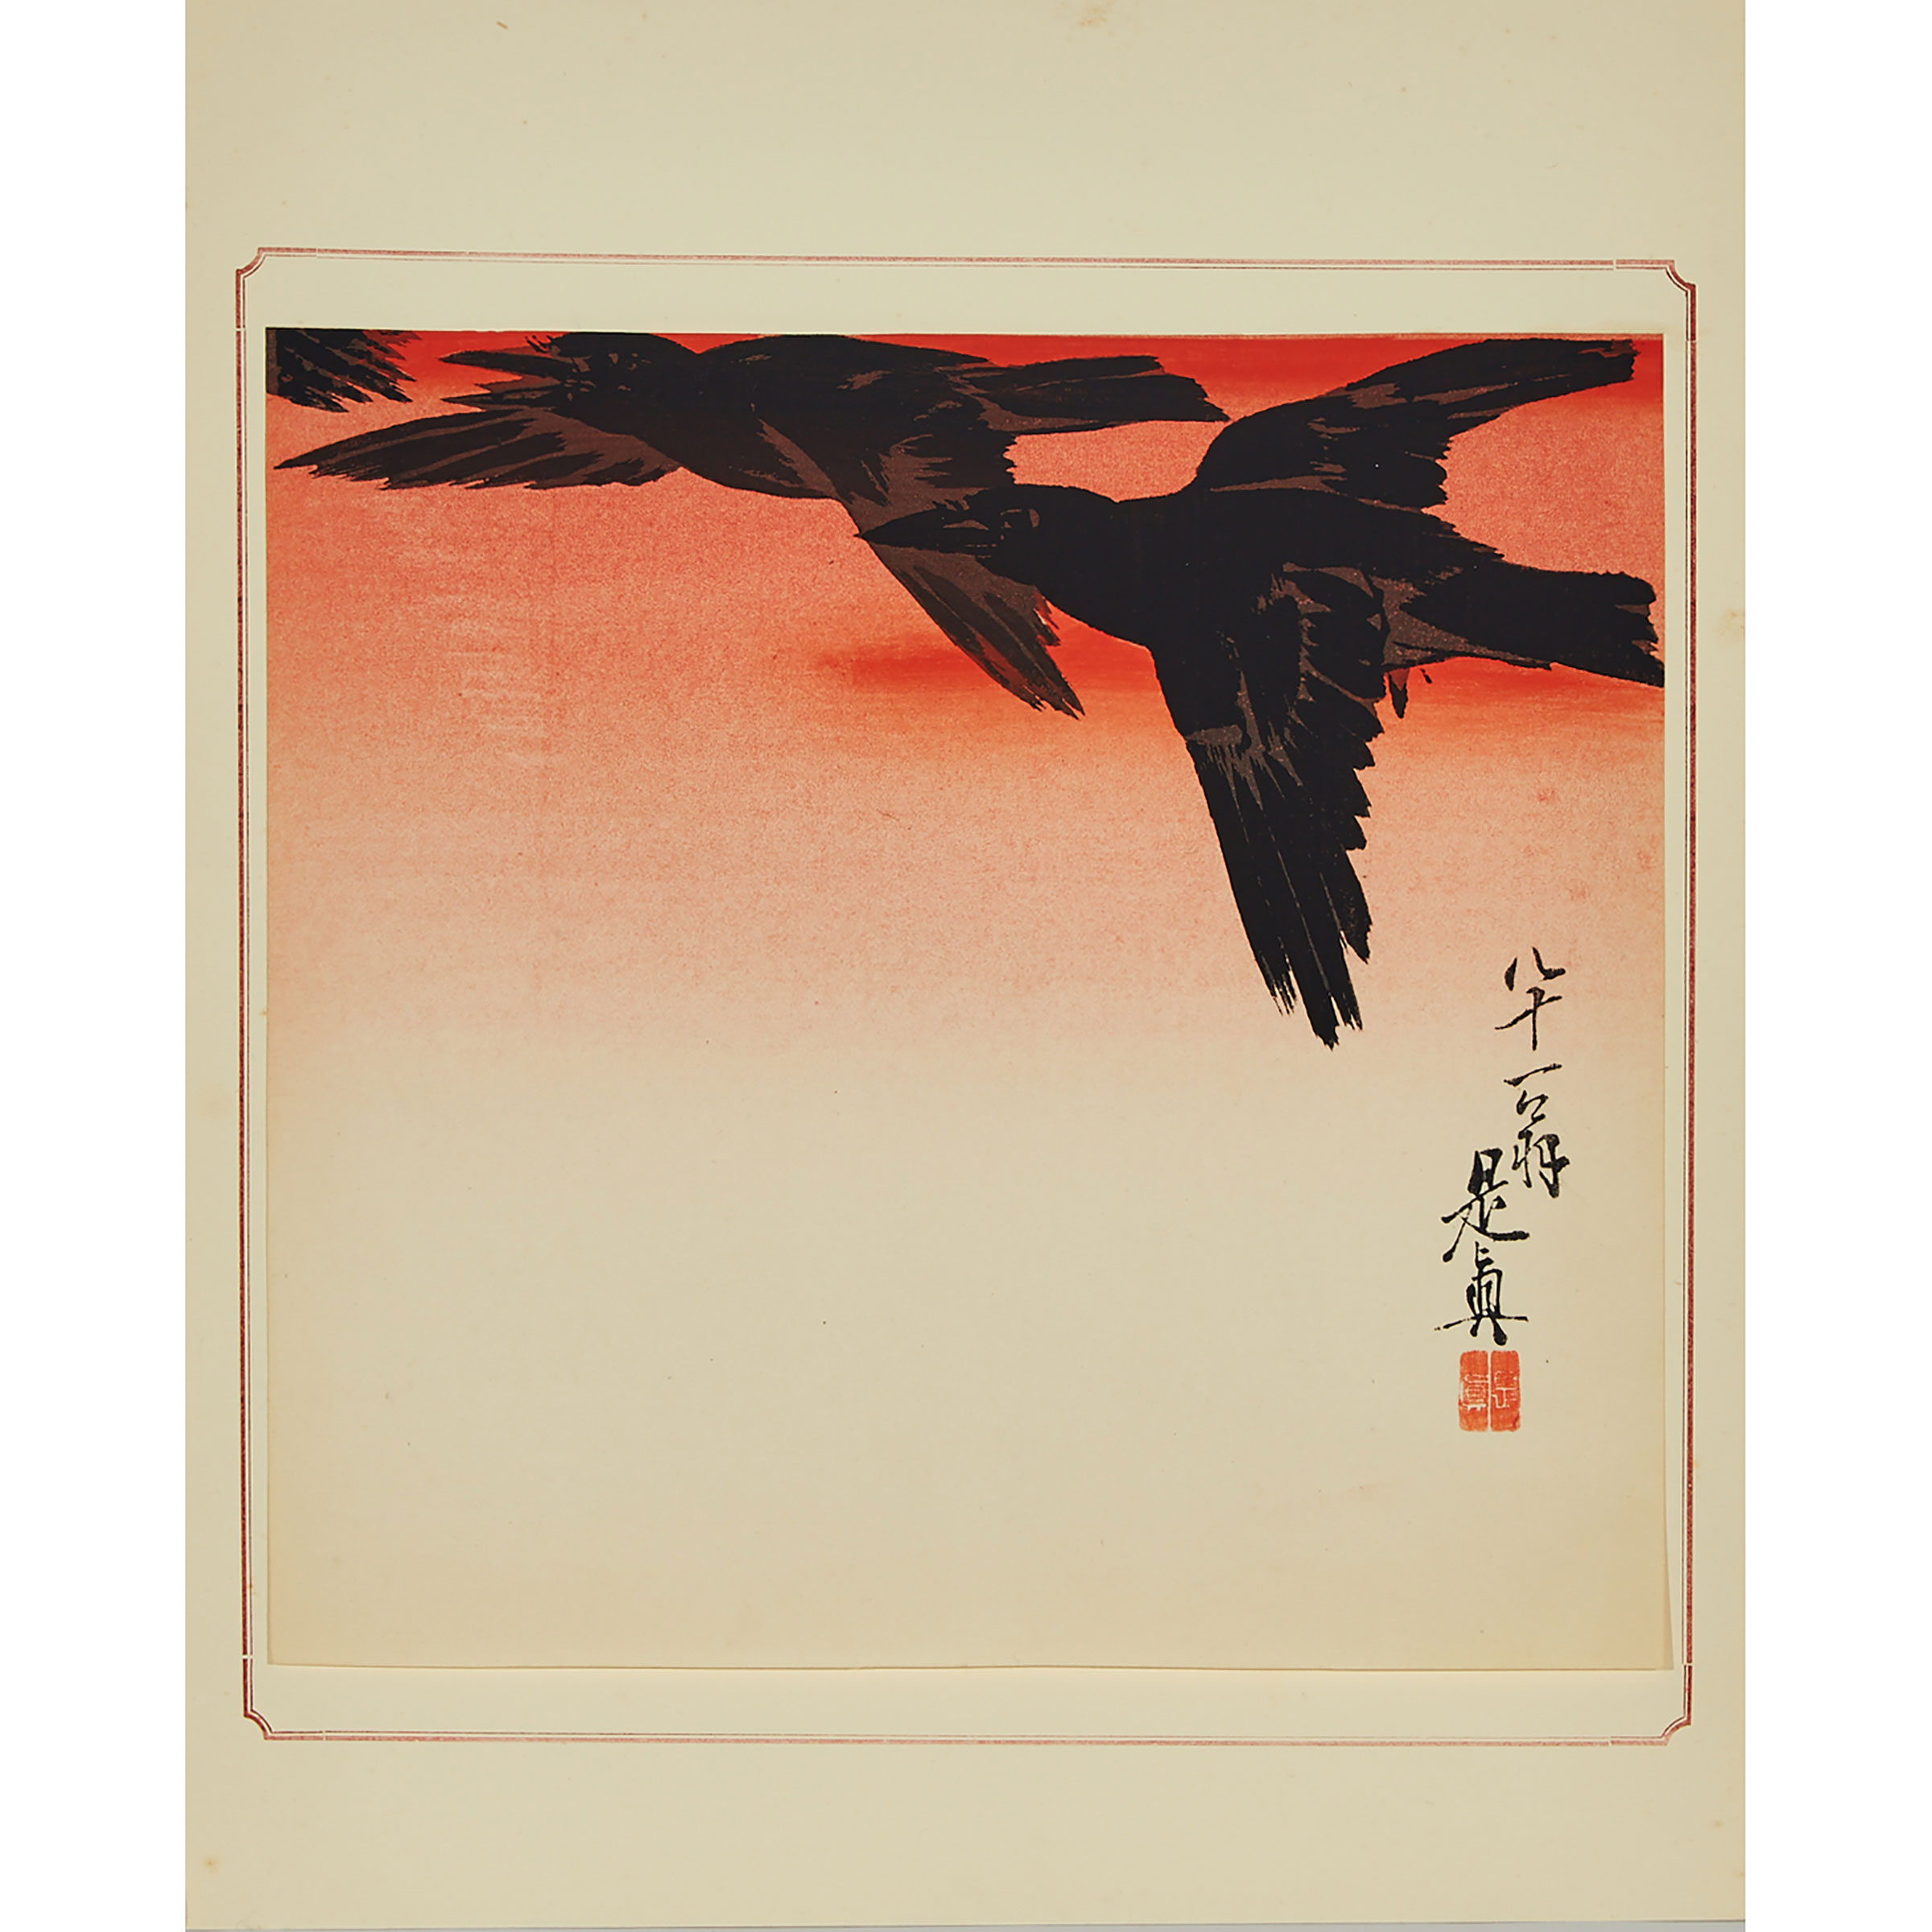 Shibata Zeshin (1807-1891), Crows in Flight at Sunrise, 1887